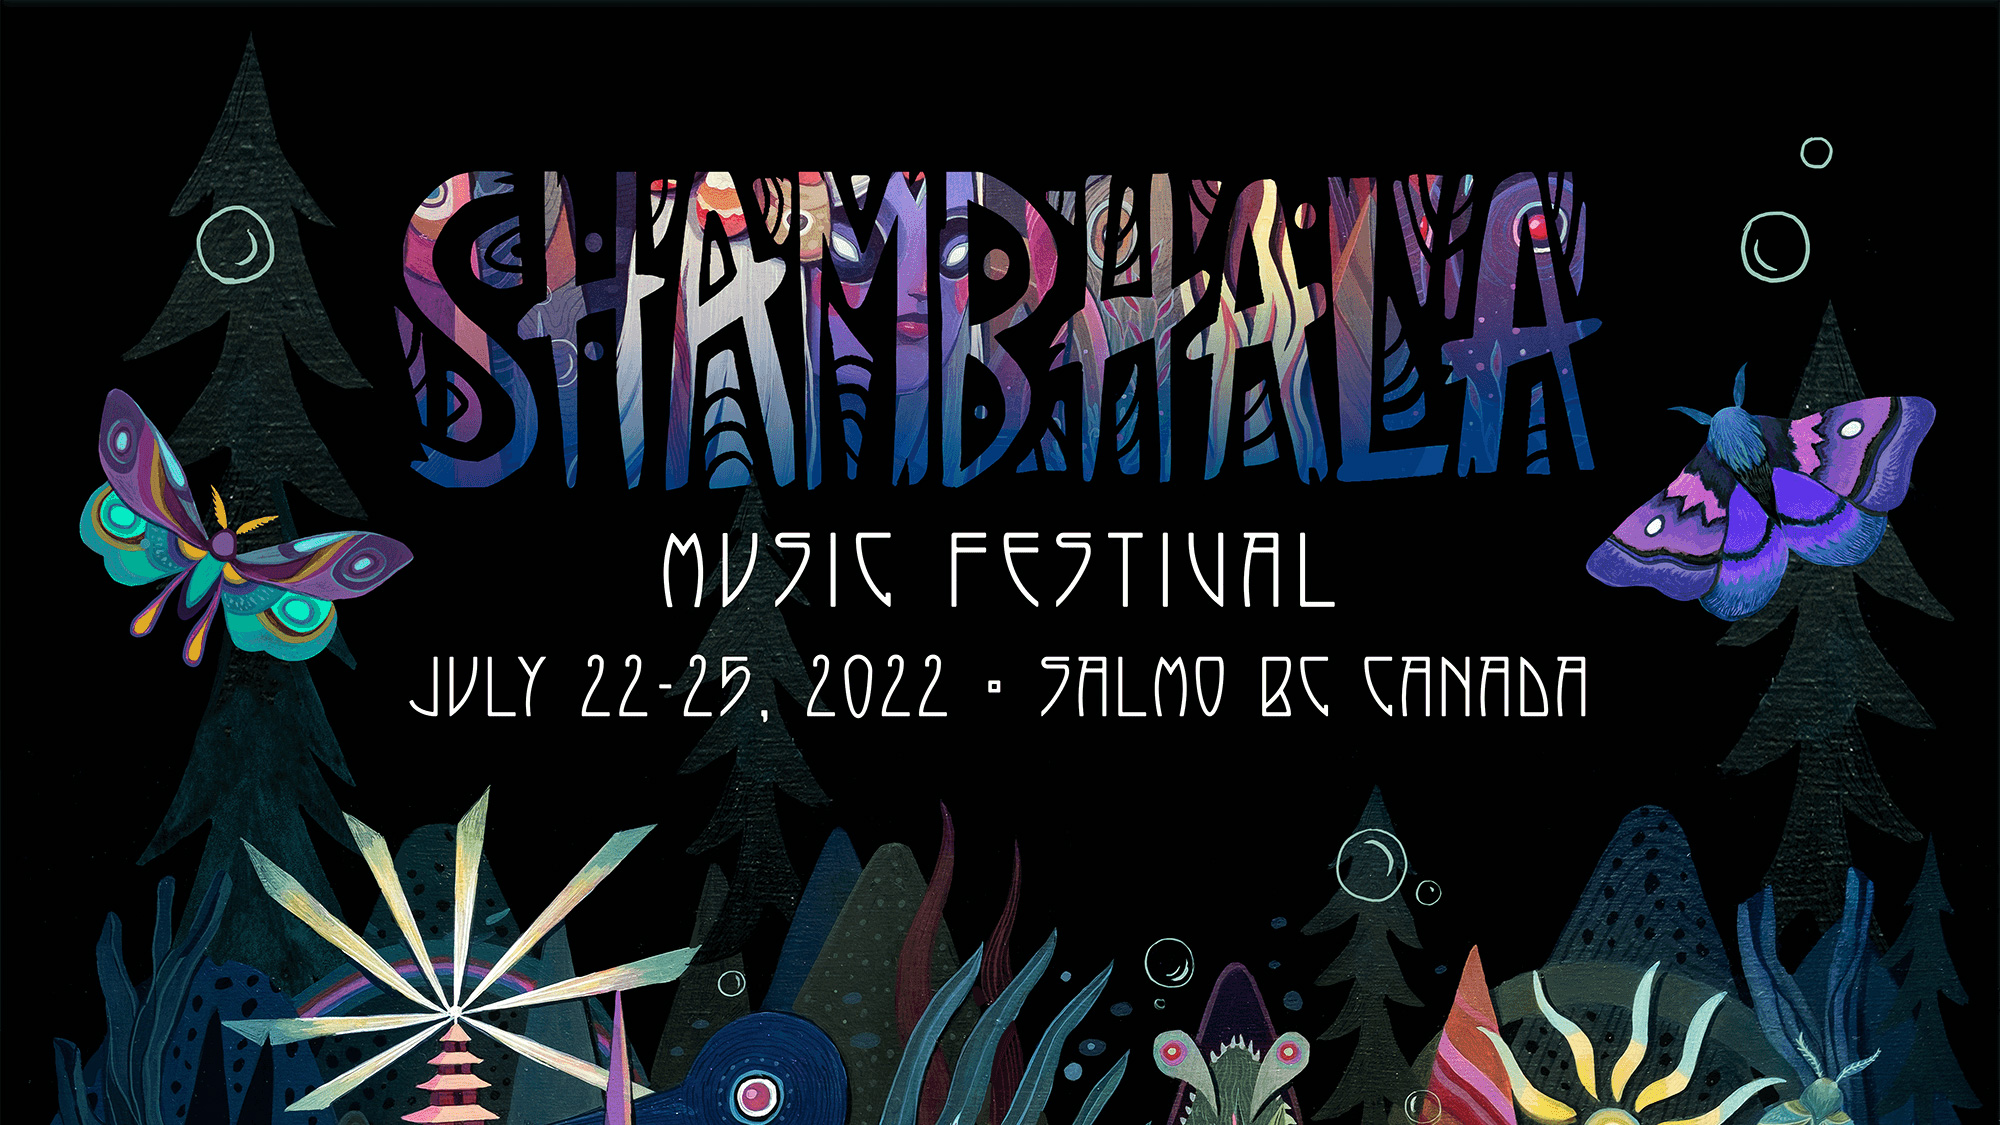 Programmation du Shambhala Music Festival 2022 - 21 - 25 juillet 2022